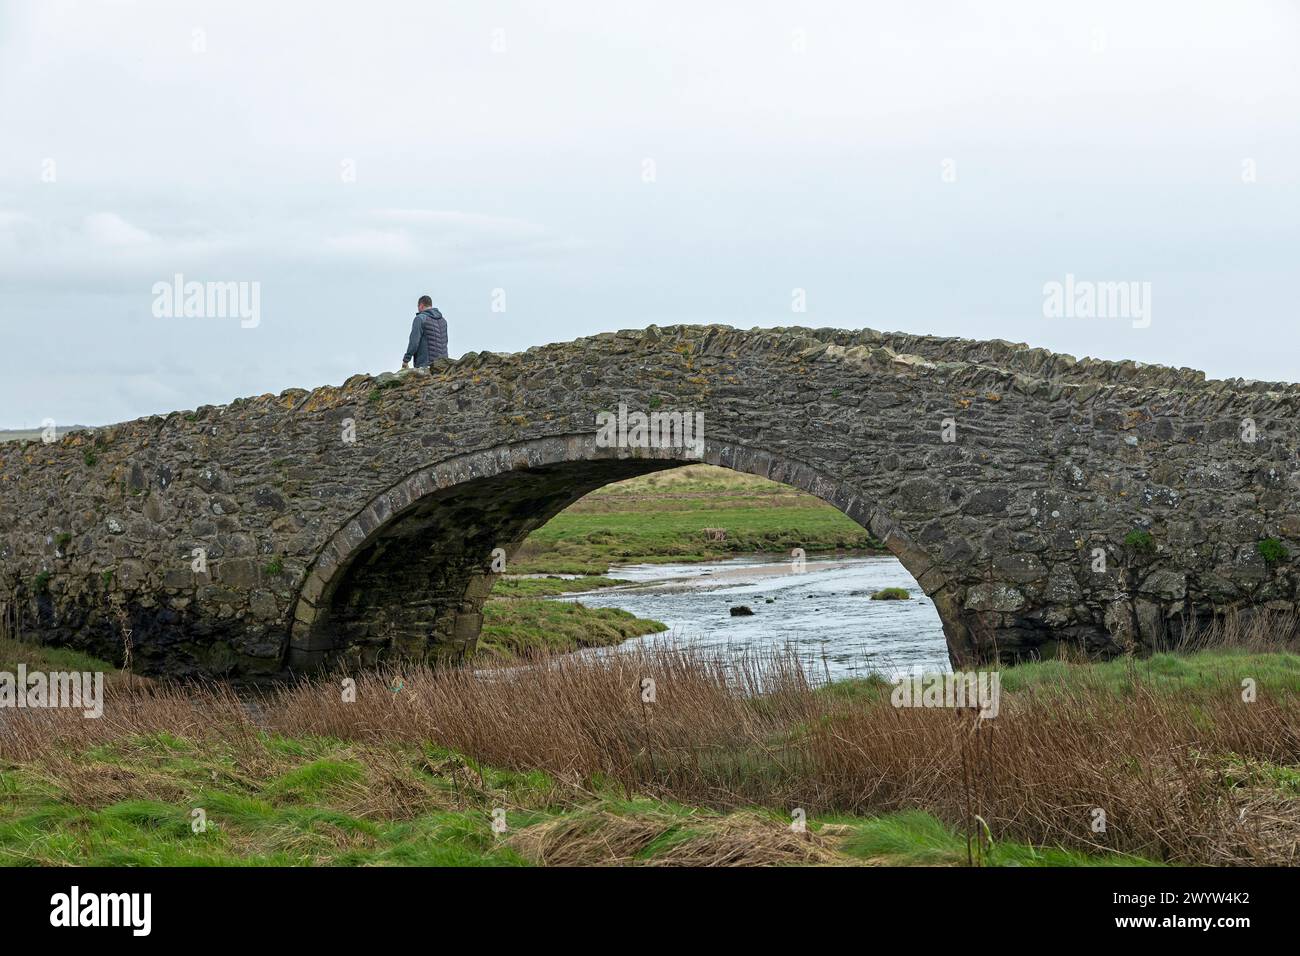 Stone bridge, person, Aberffraw, Anglesey Island, Wales, Great Britain Stock Photo